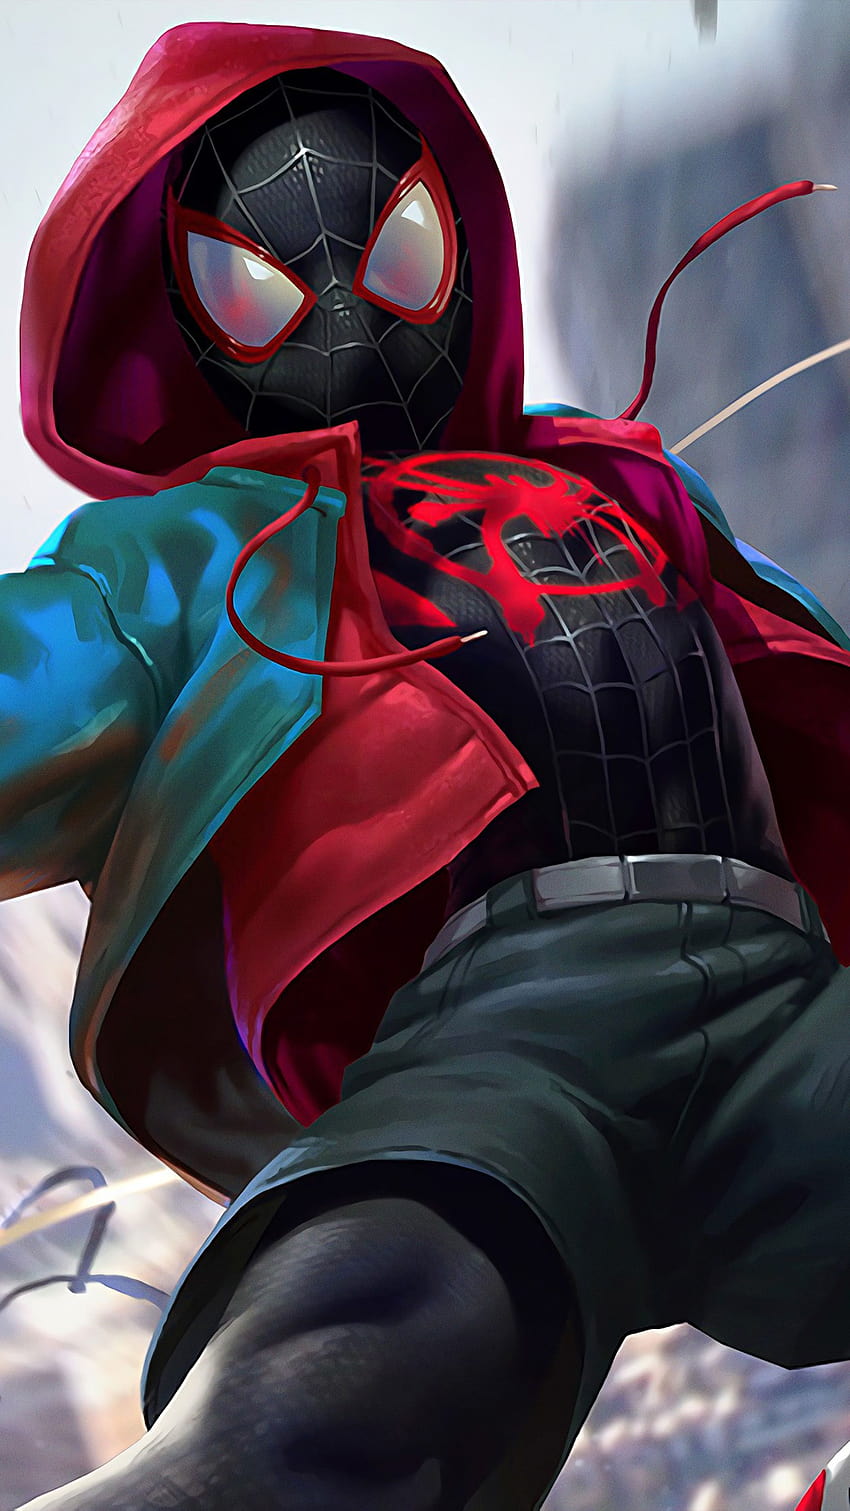 Marvel's Spider-Man Remastered Wallpaper 4K, Photo mode, Spiderman